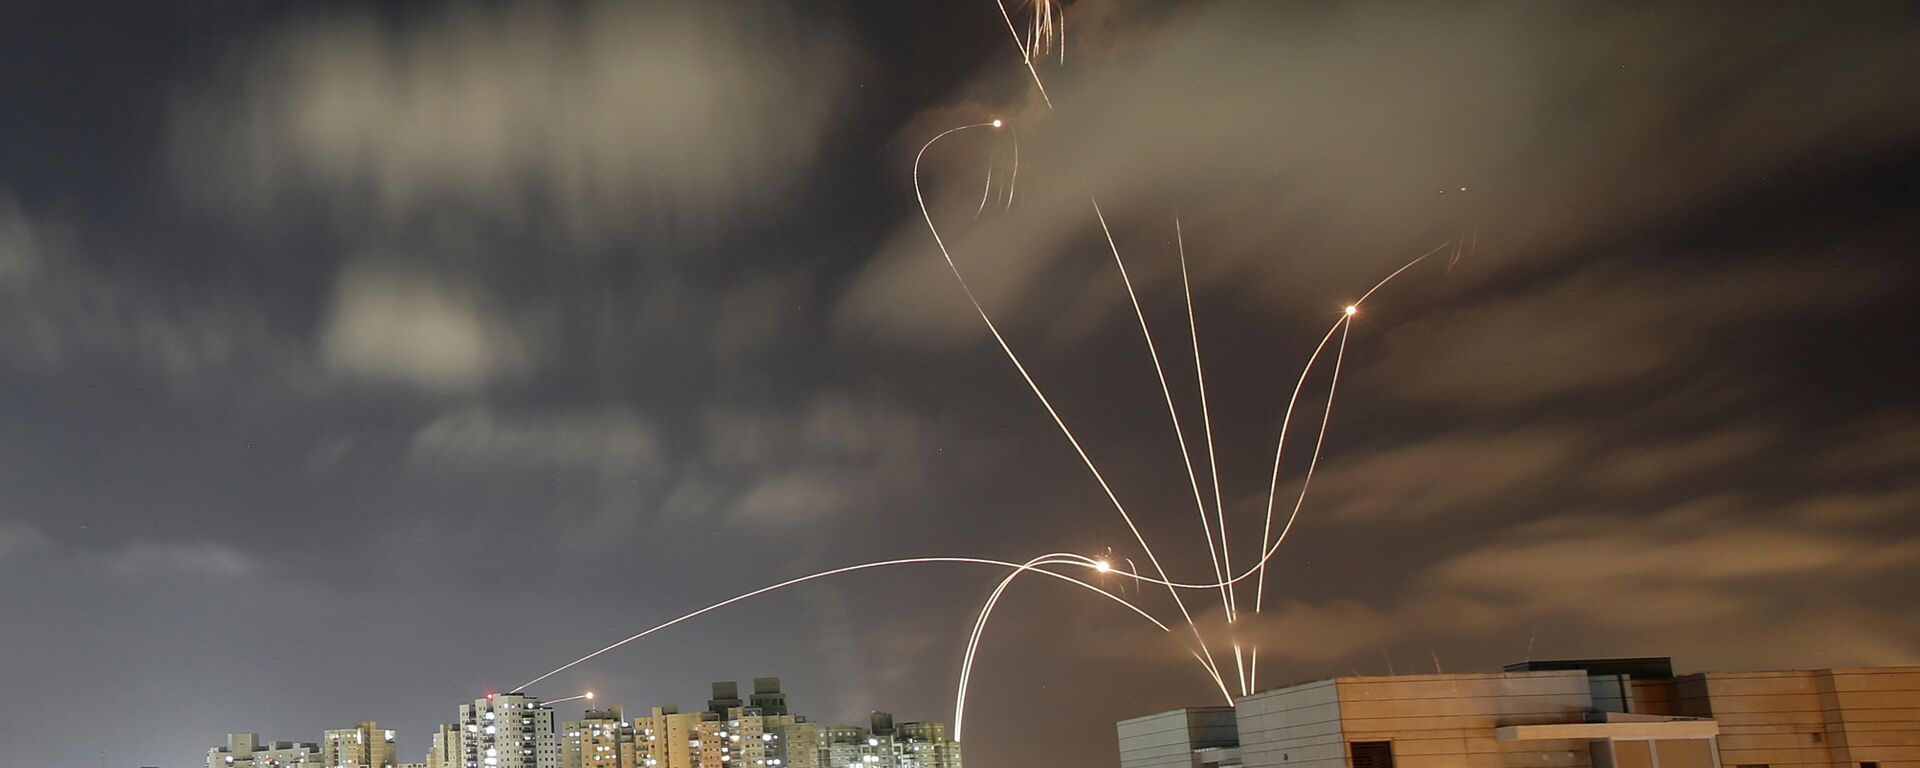 La Cúpula de Hierro israelí intercepta misiles lanzados desde Gaza - Sputnik Mundo, 1920, 28.05.2021